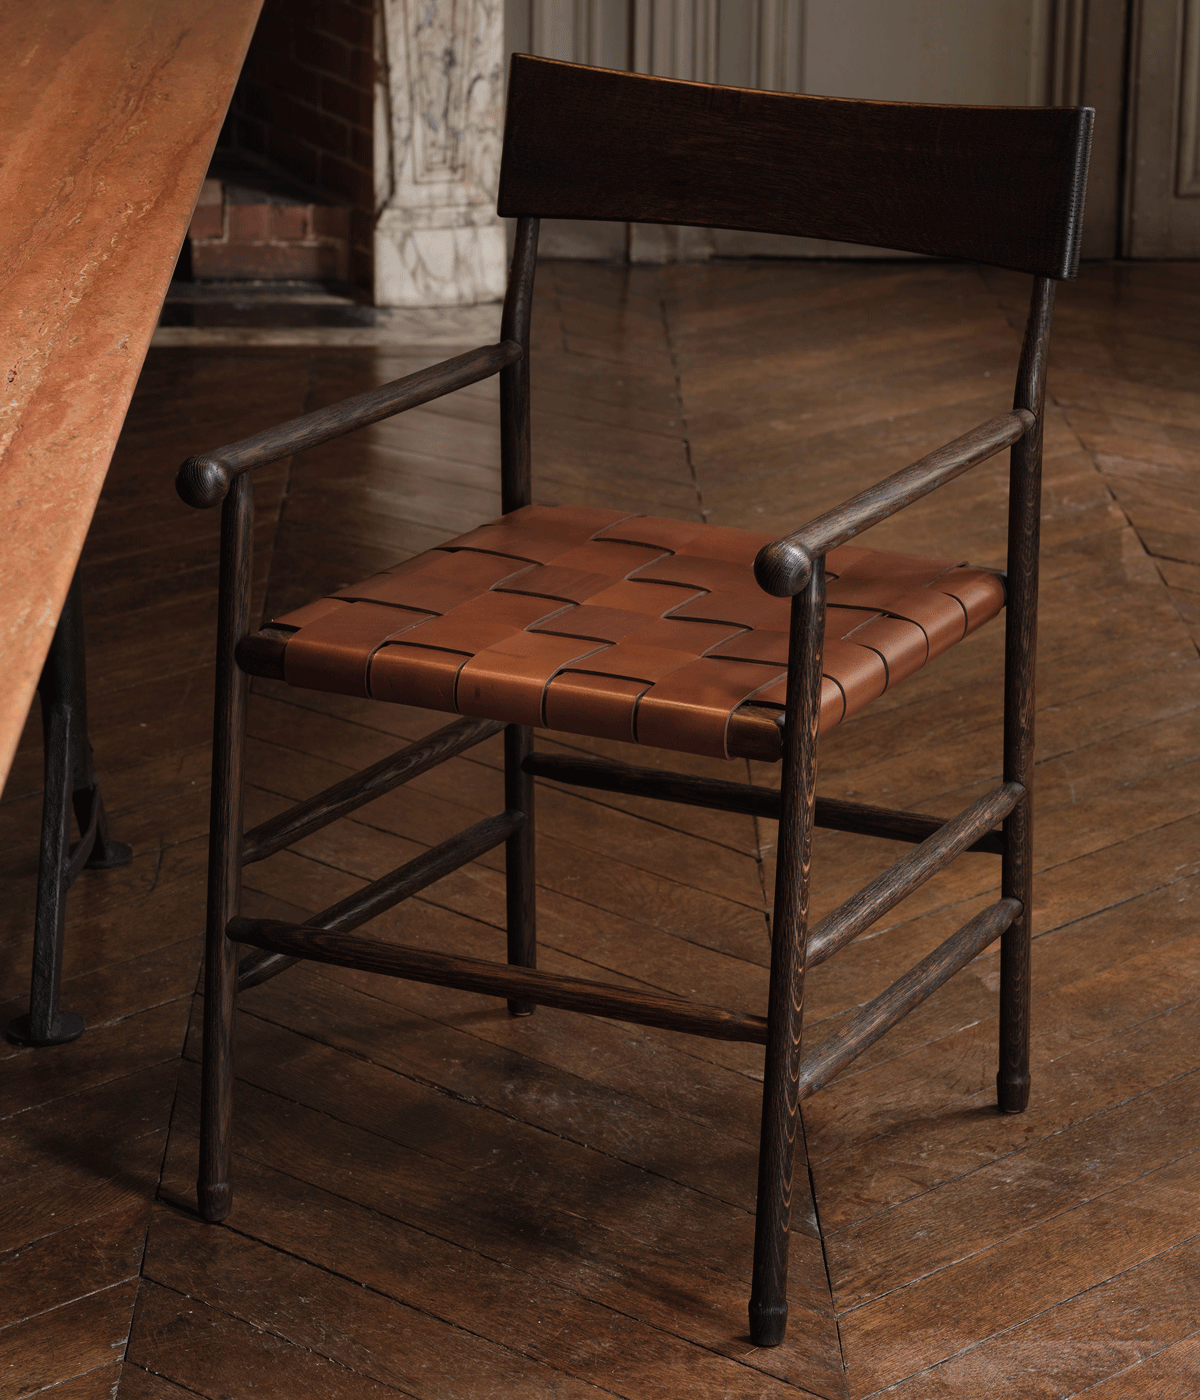 brown chair on wooden floor